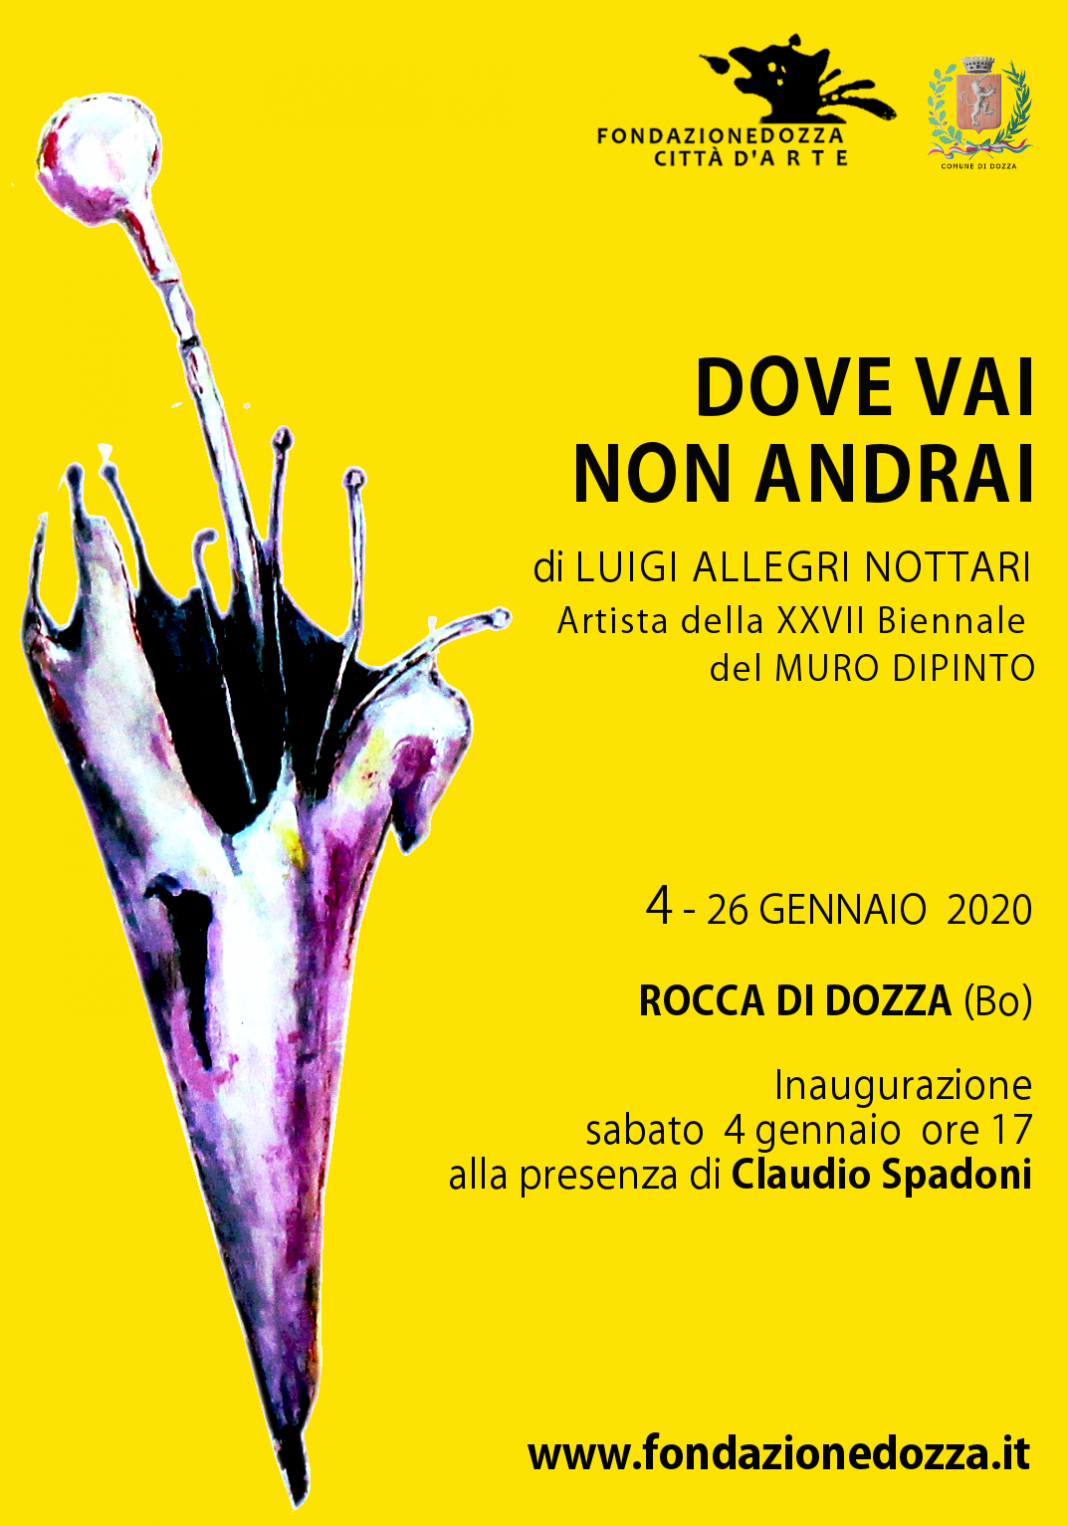 Luigi Allegri Nottari – Dove vai non andraihttps://www.exibart.com/repository/media/formidable/11/locandina-nottari-prova-2-1068x1526.png